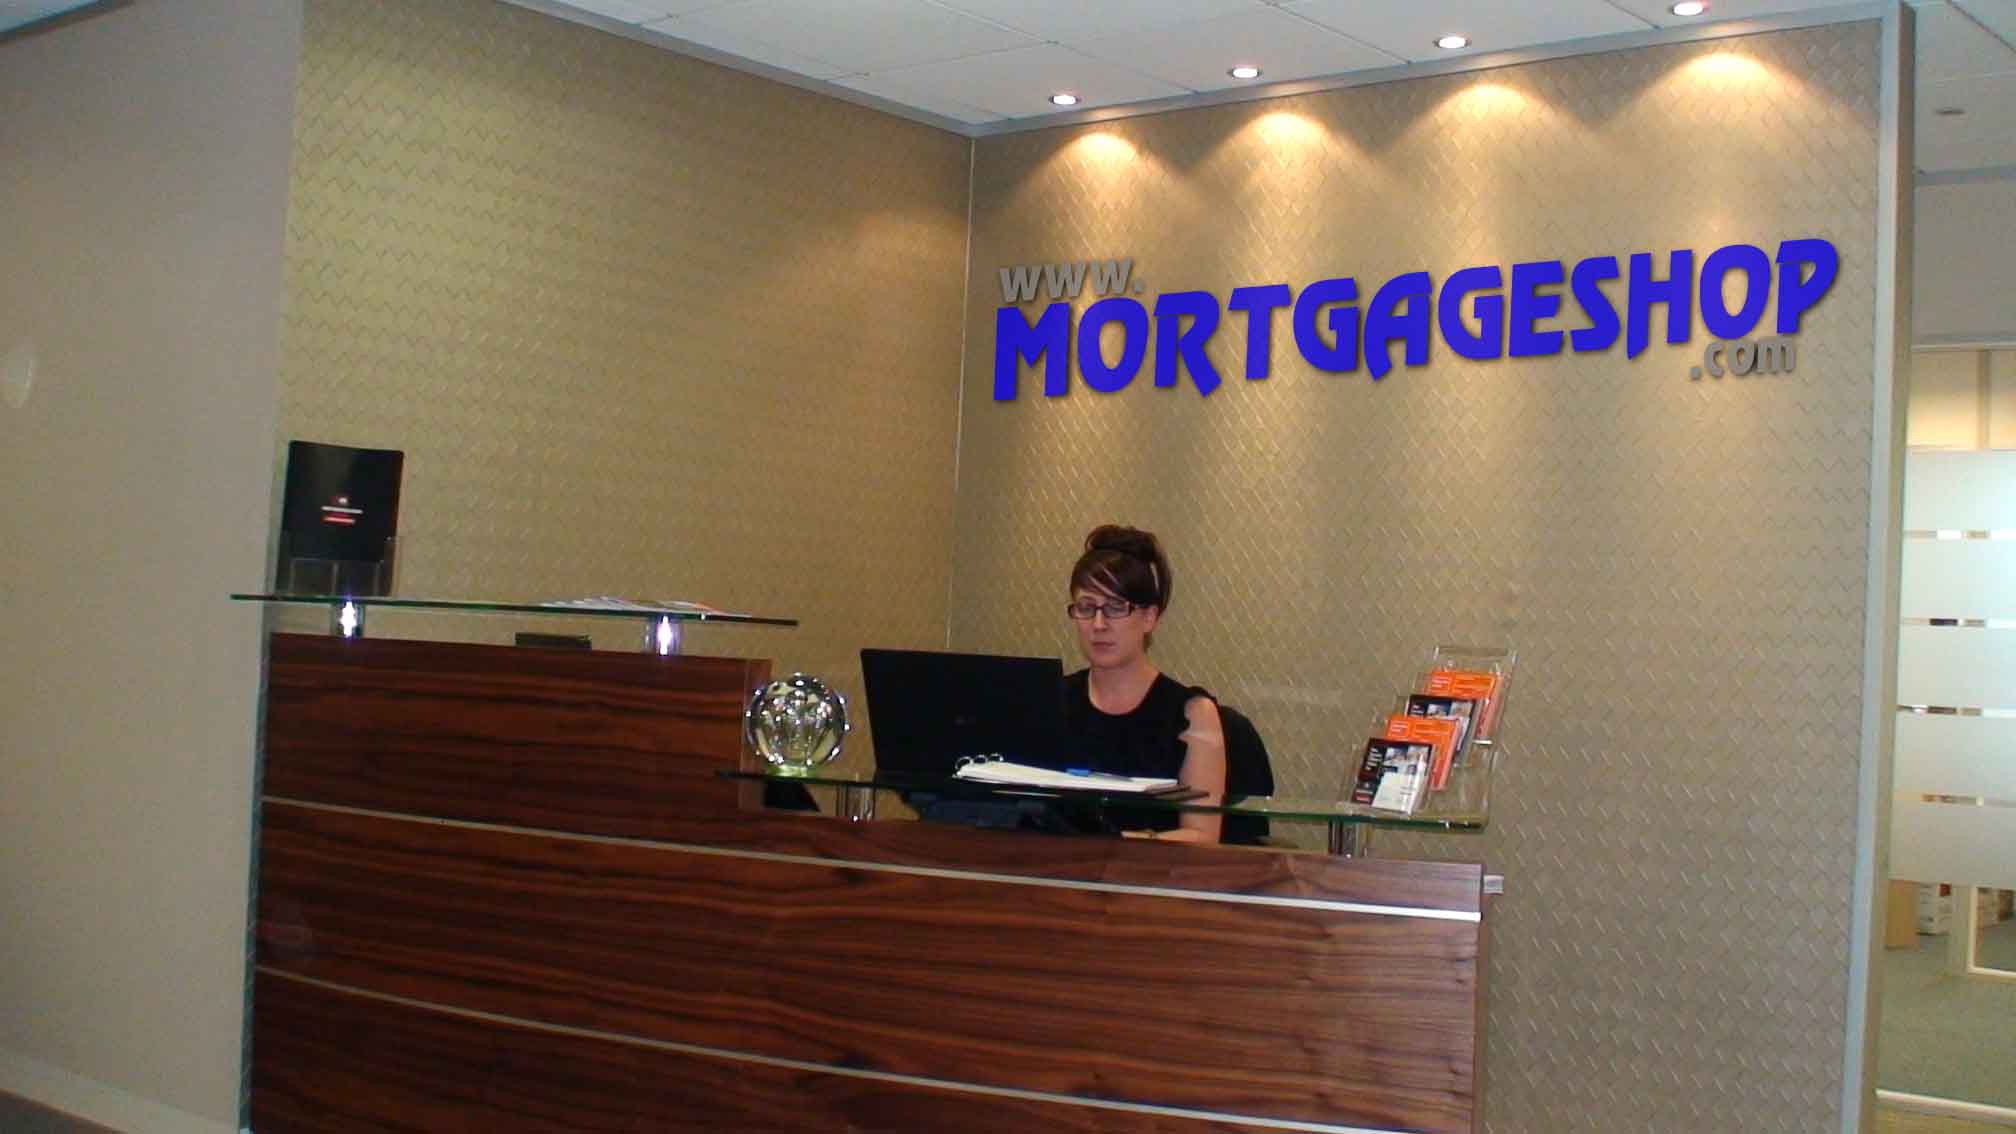 About MortgageShop.com